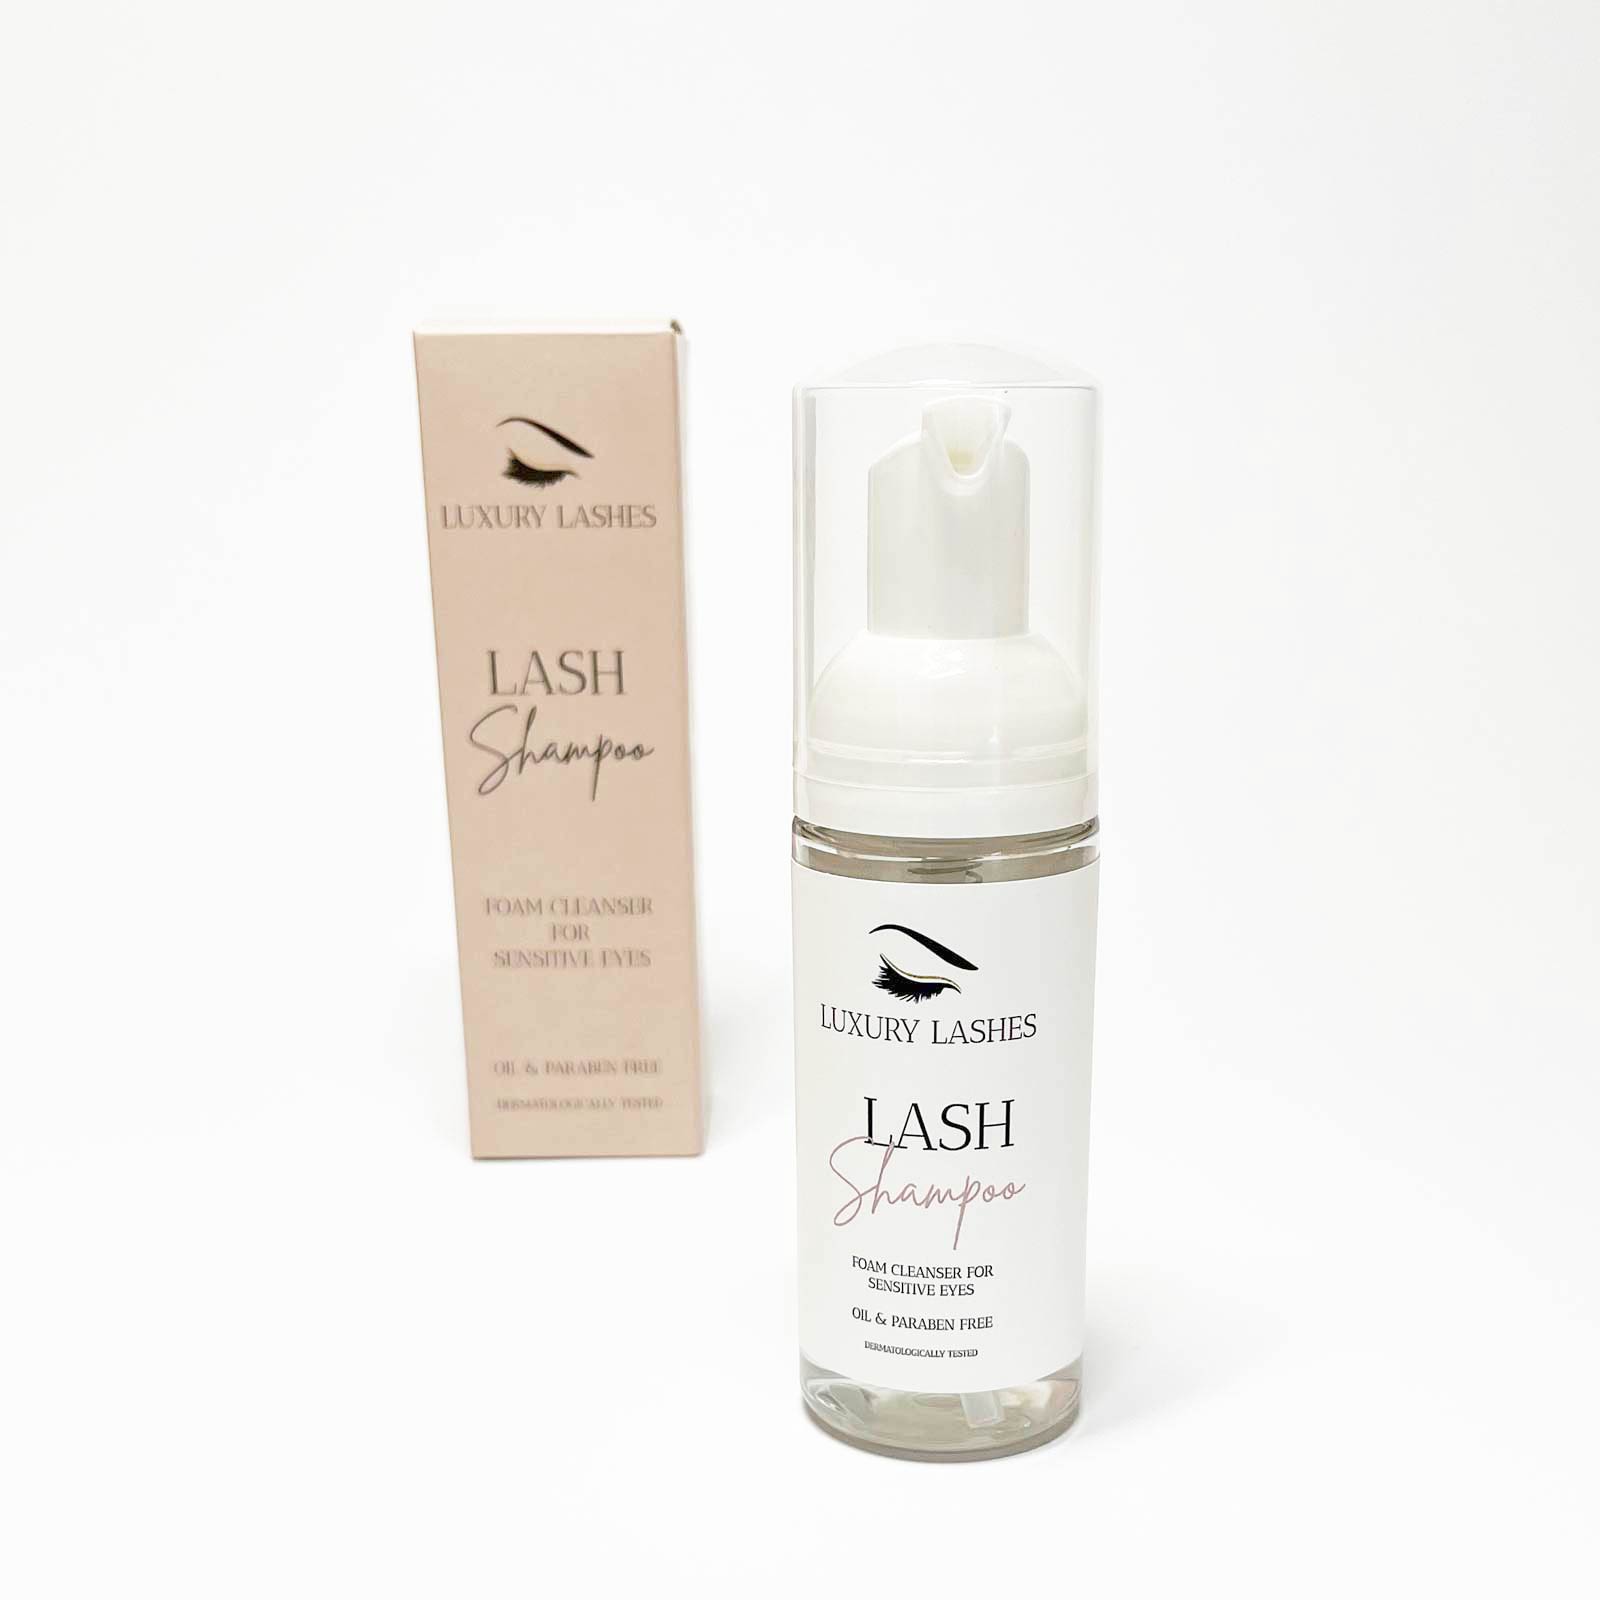 Wimperextensions Shampoo (Lash Foam Cleanser) met verpakking van Luxury Lashes